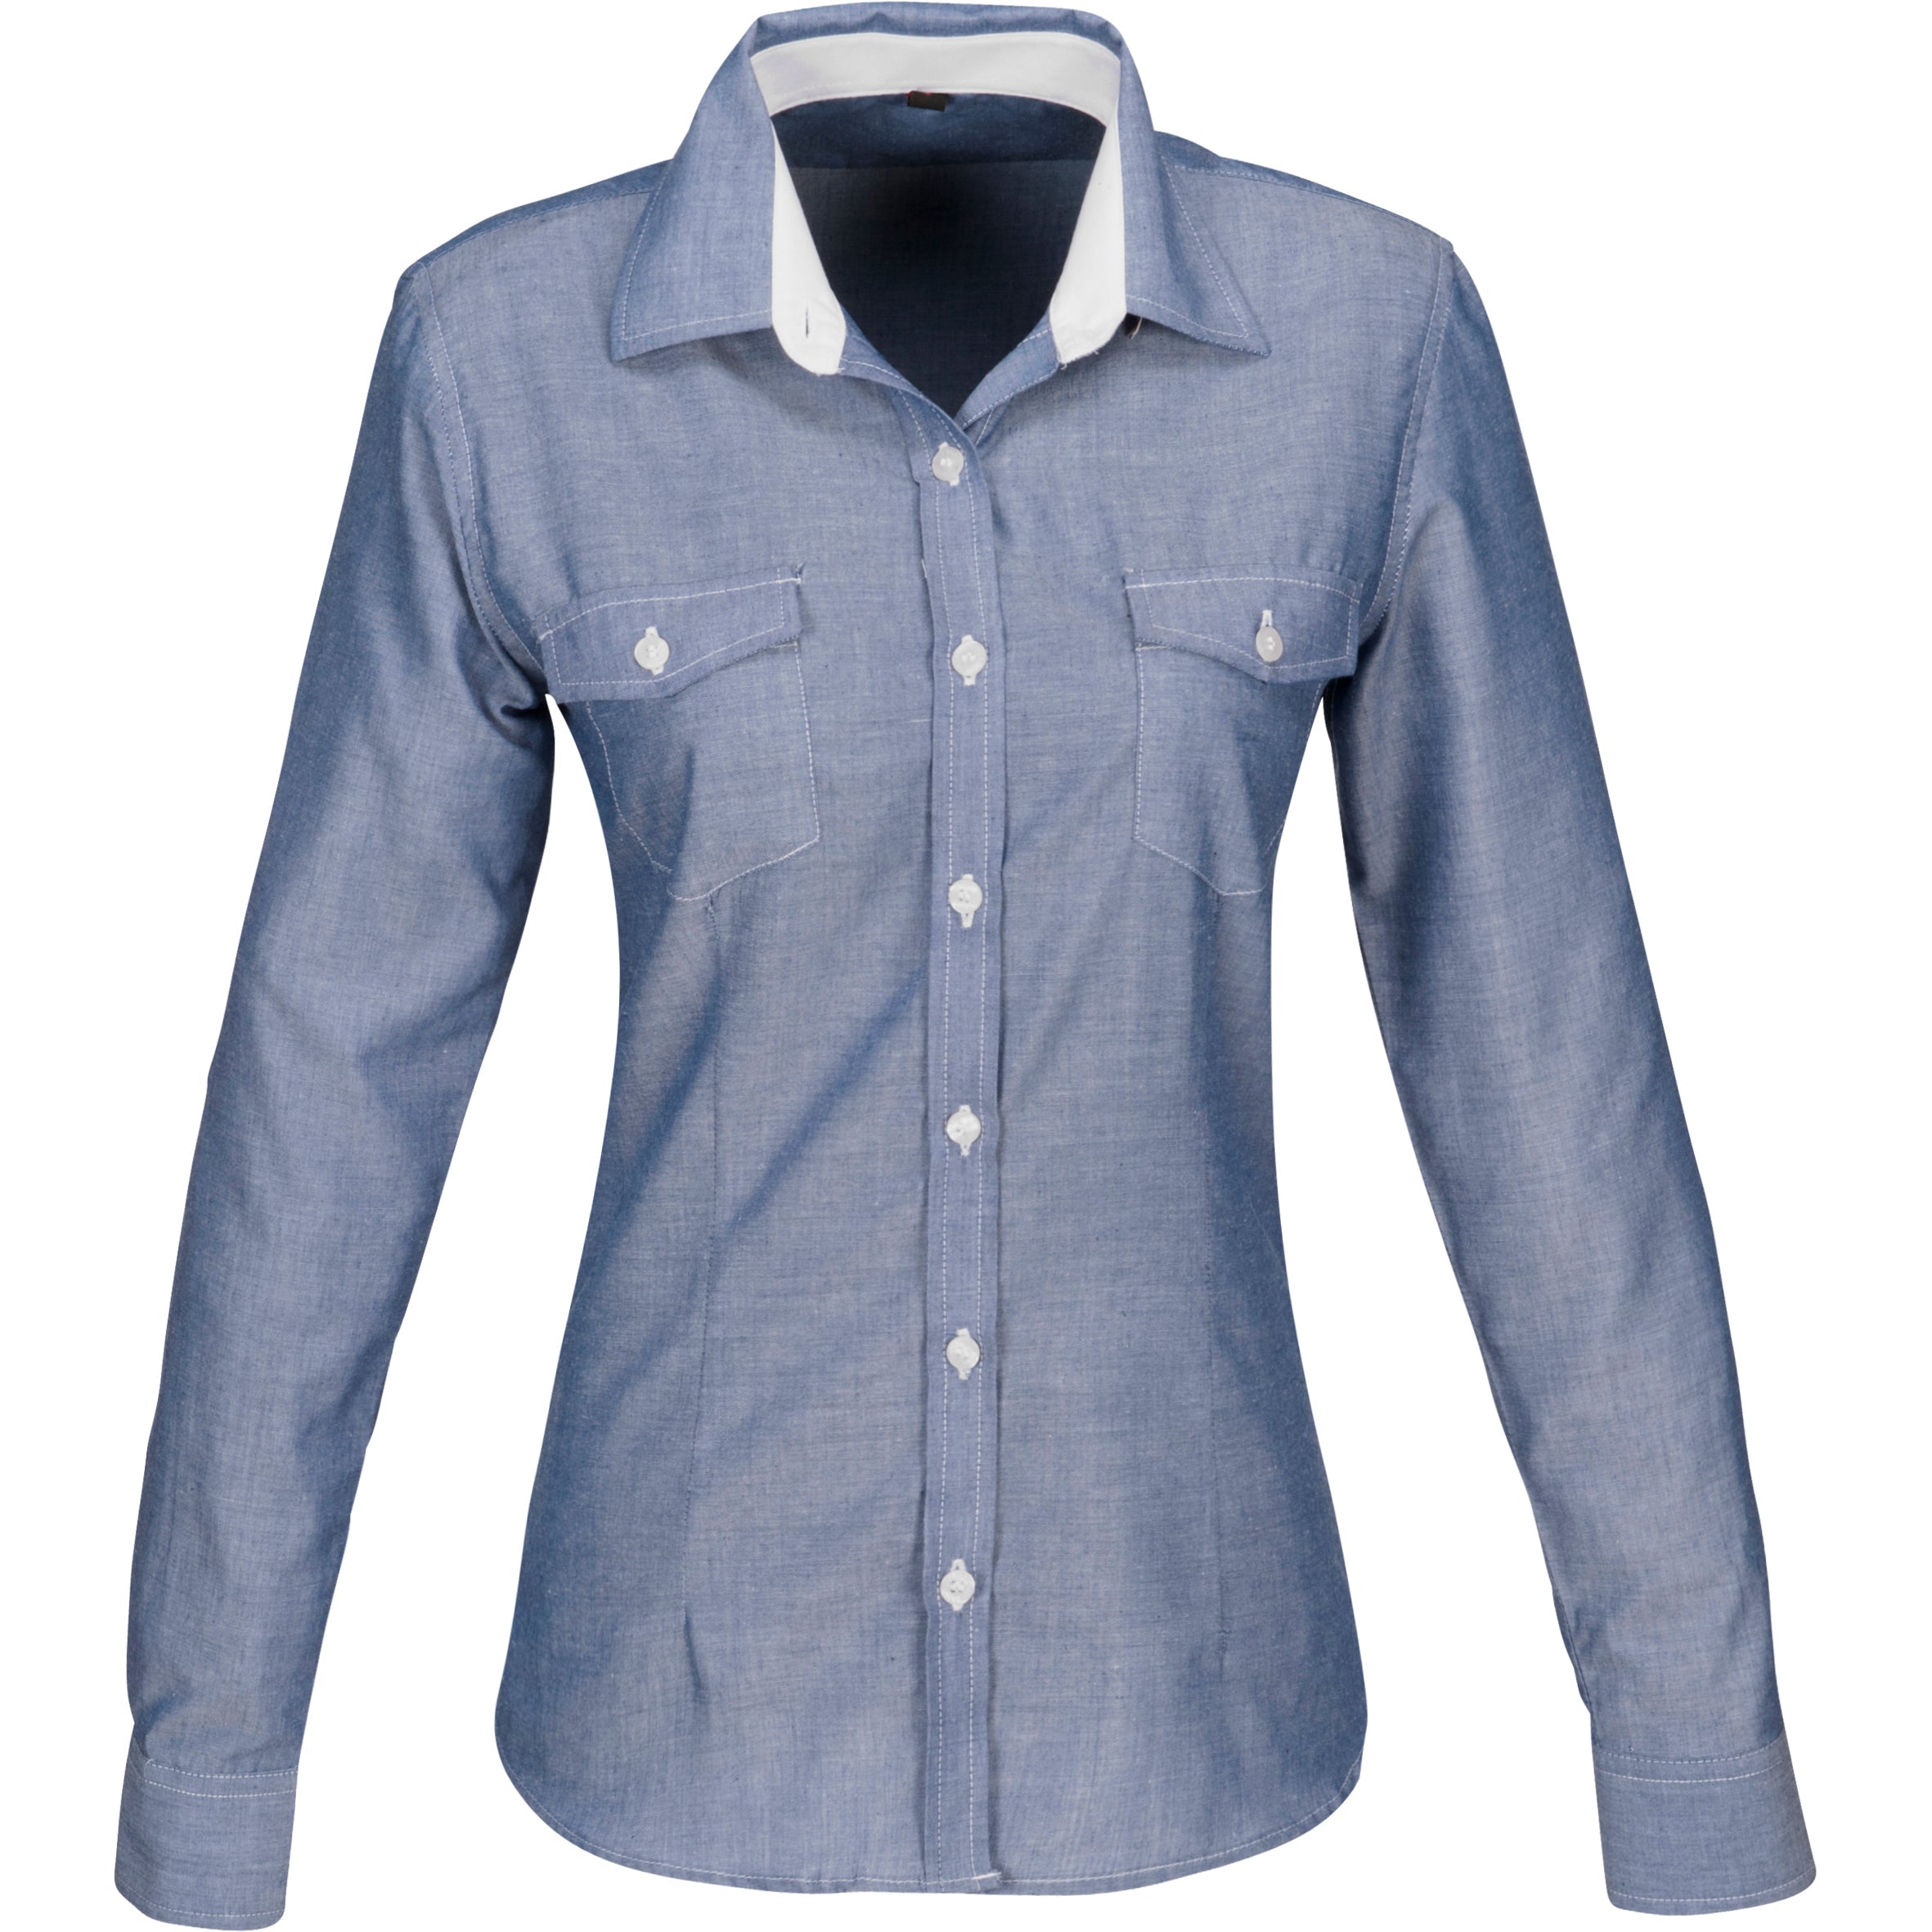 Ladies Long Sleeve Windsor Shirt - Light Blue Only-2XL-Navy-N